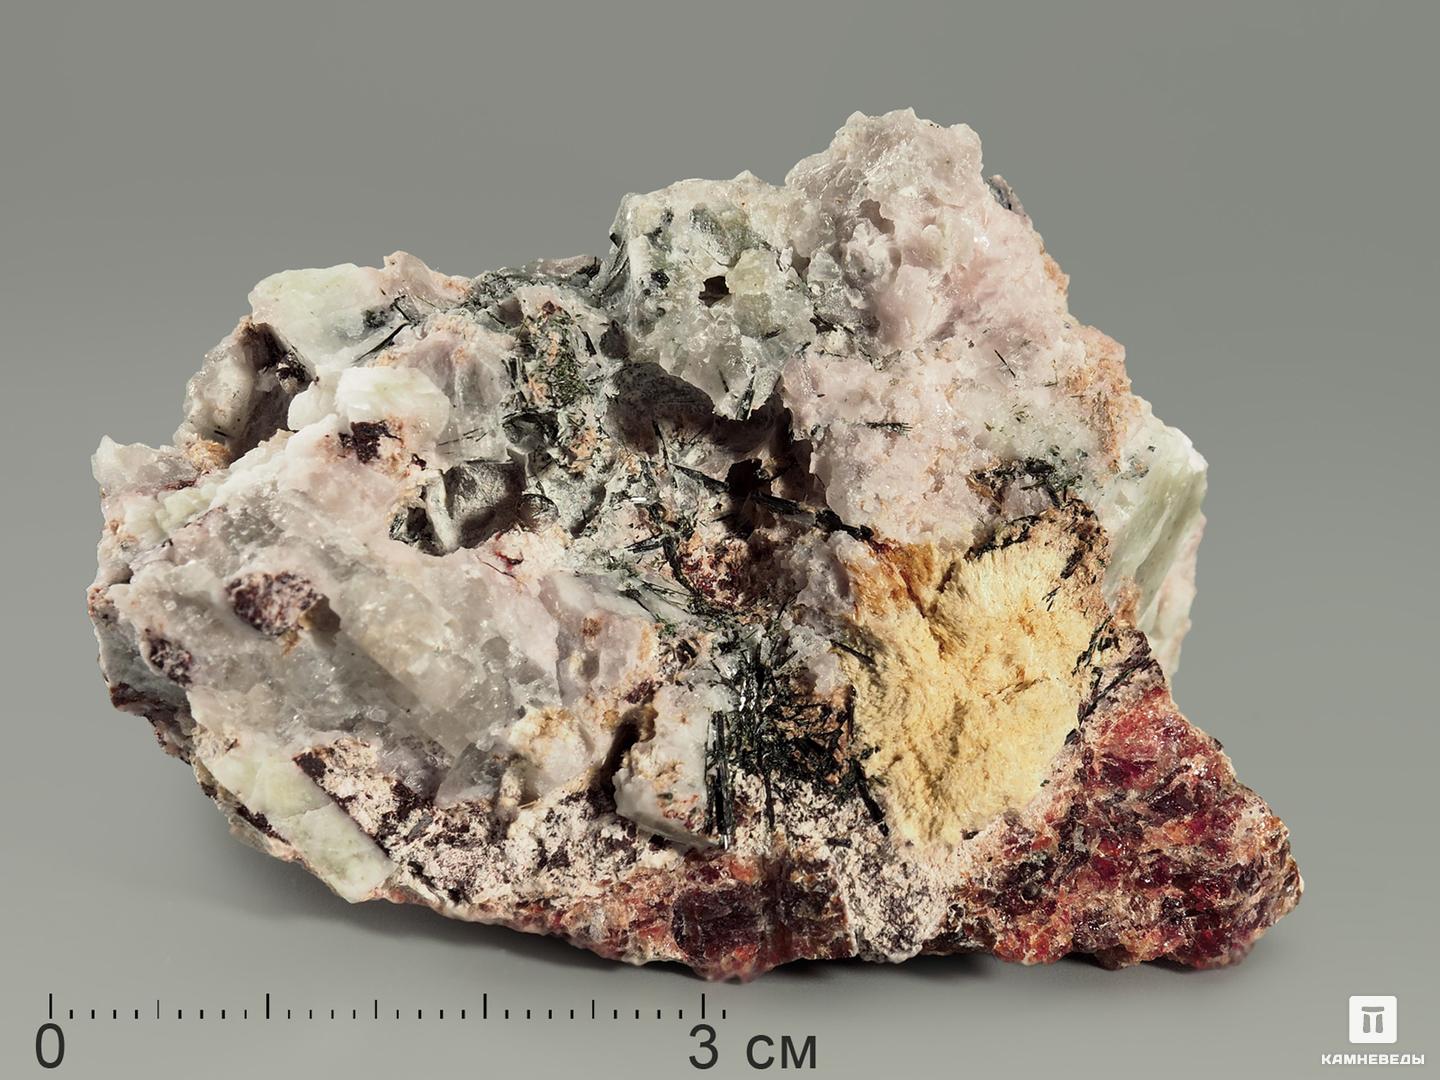 Баритолампрофиллит с манганоэвдиалитом и апатитом, 7,1х4,4х4,3 см